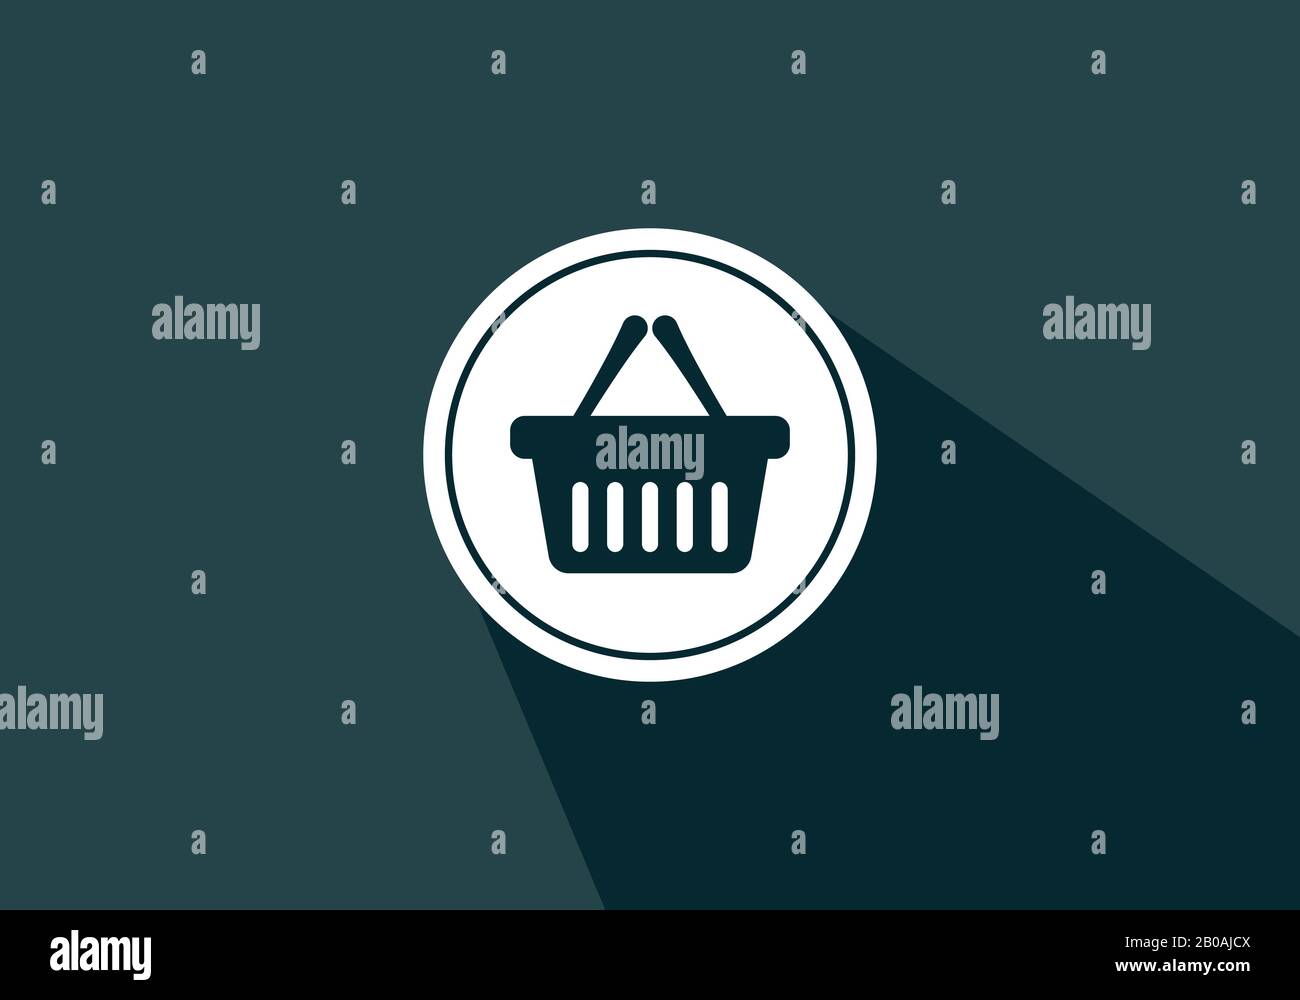 Shopping cart icon, Add to cart flat sign symbols logo Stock Vector